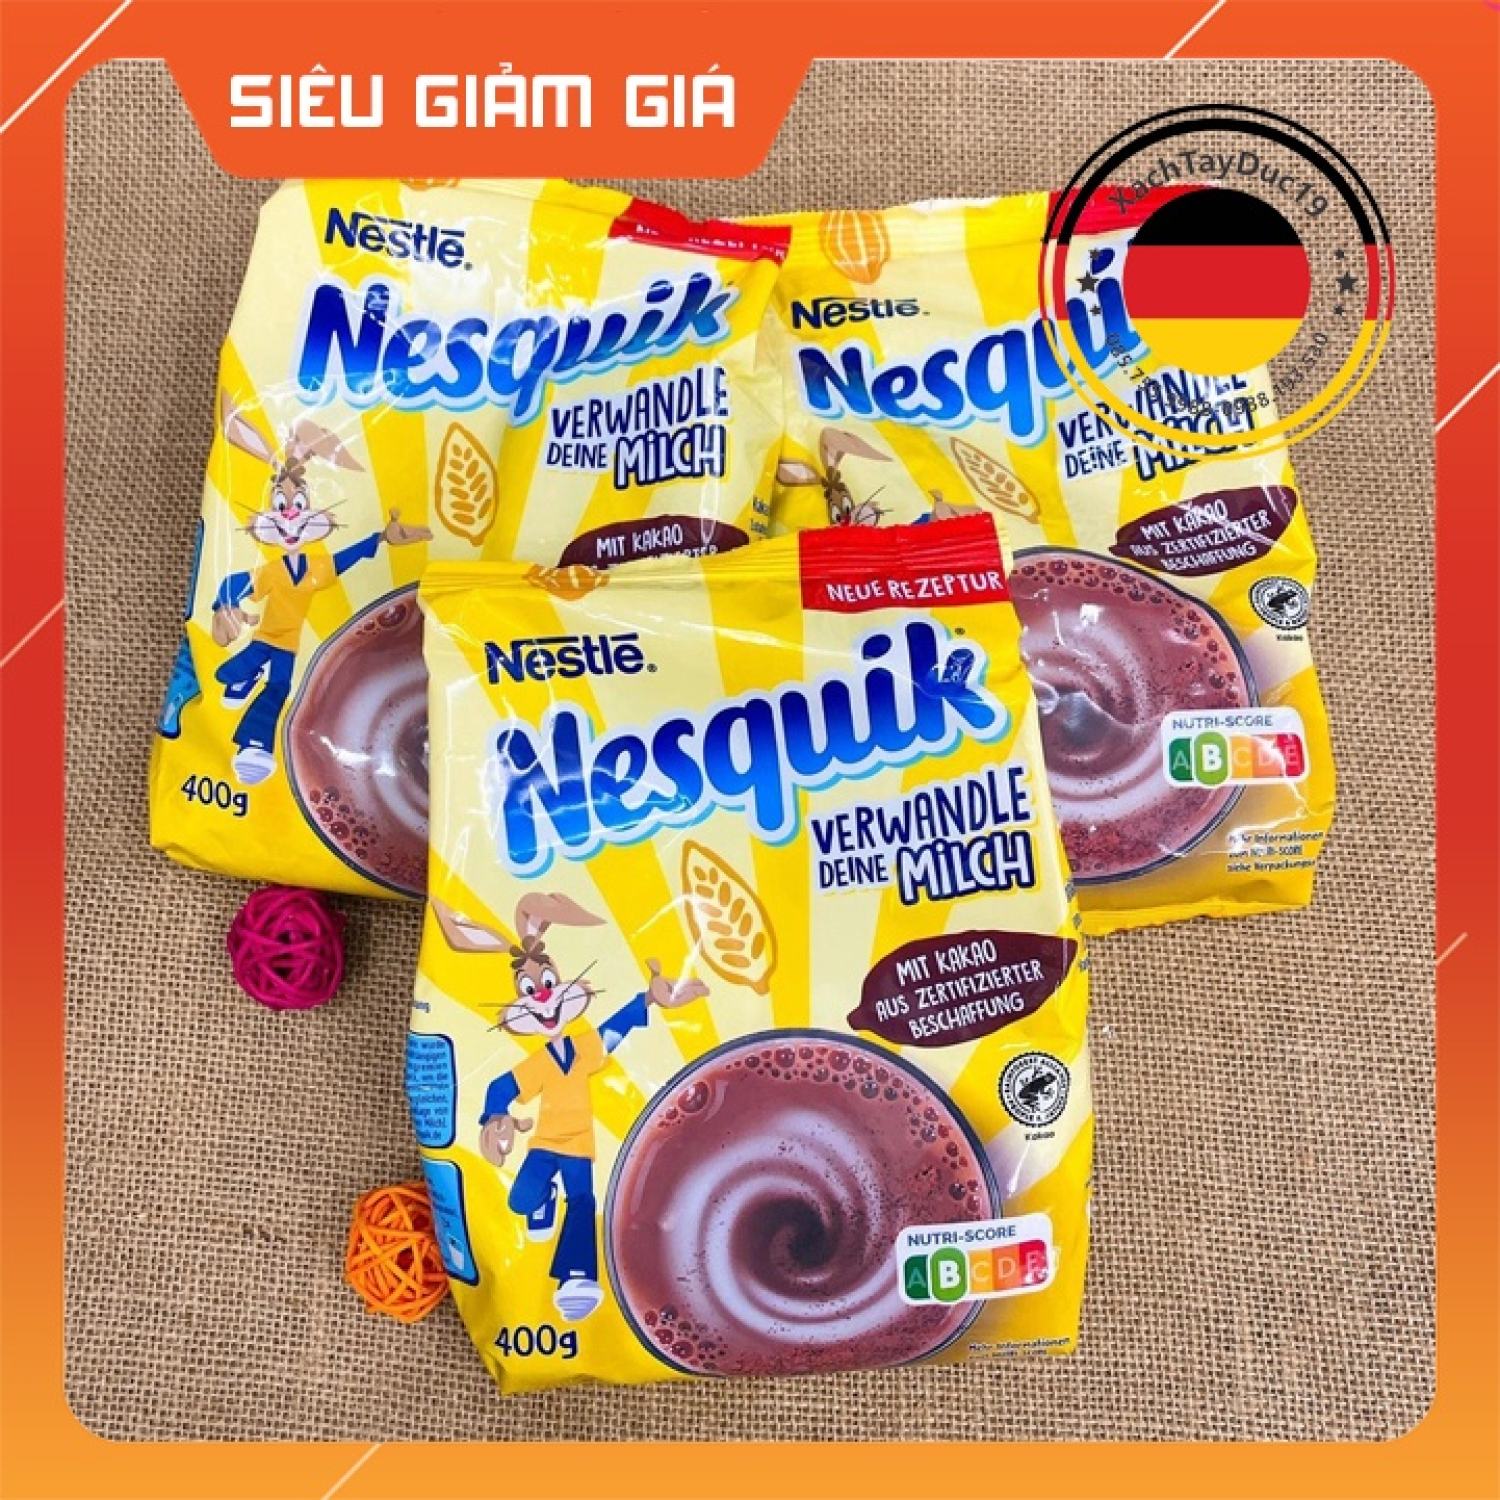 Bột Cacao Nesquik Nestle 400g của Đức